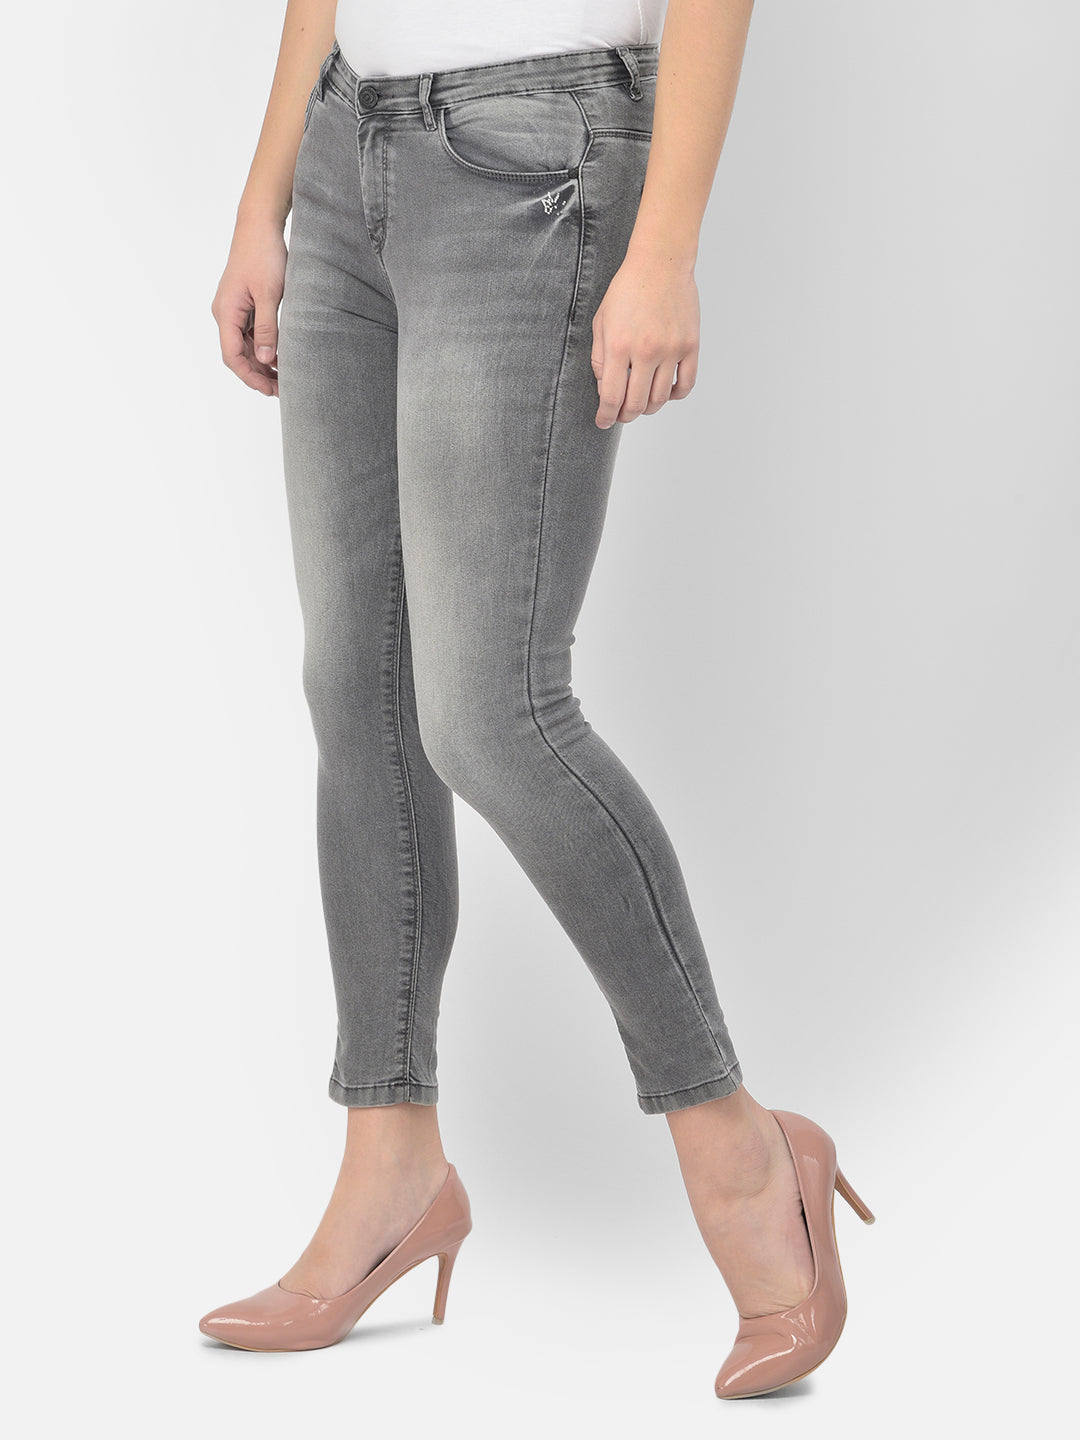 Grey Cropped Jeans - Women Jeans